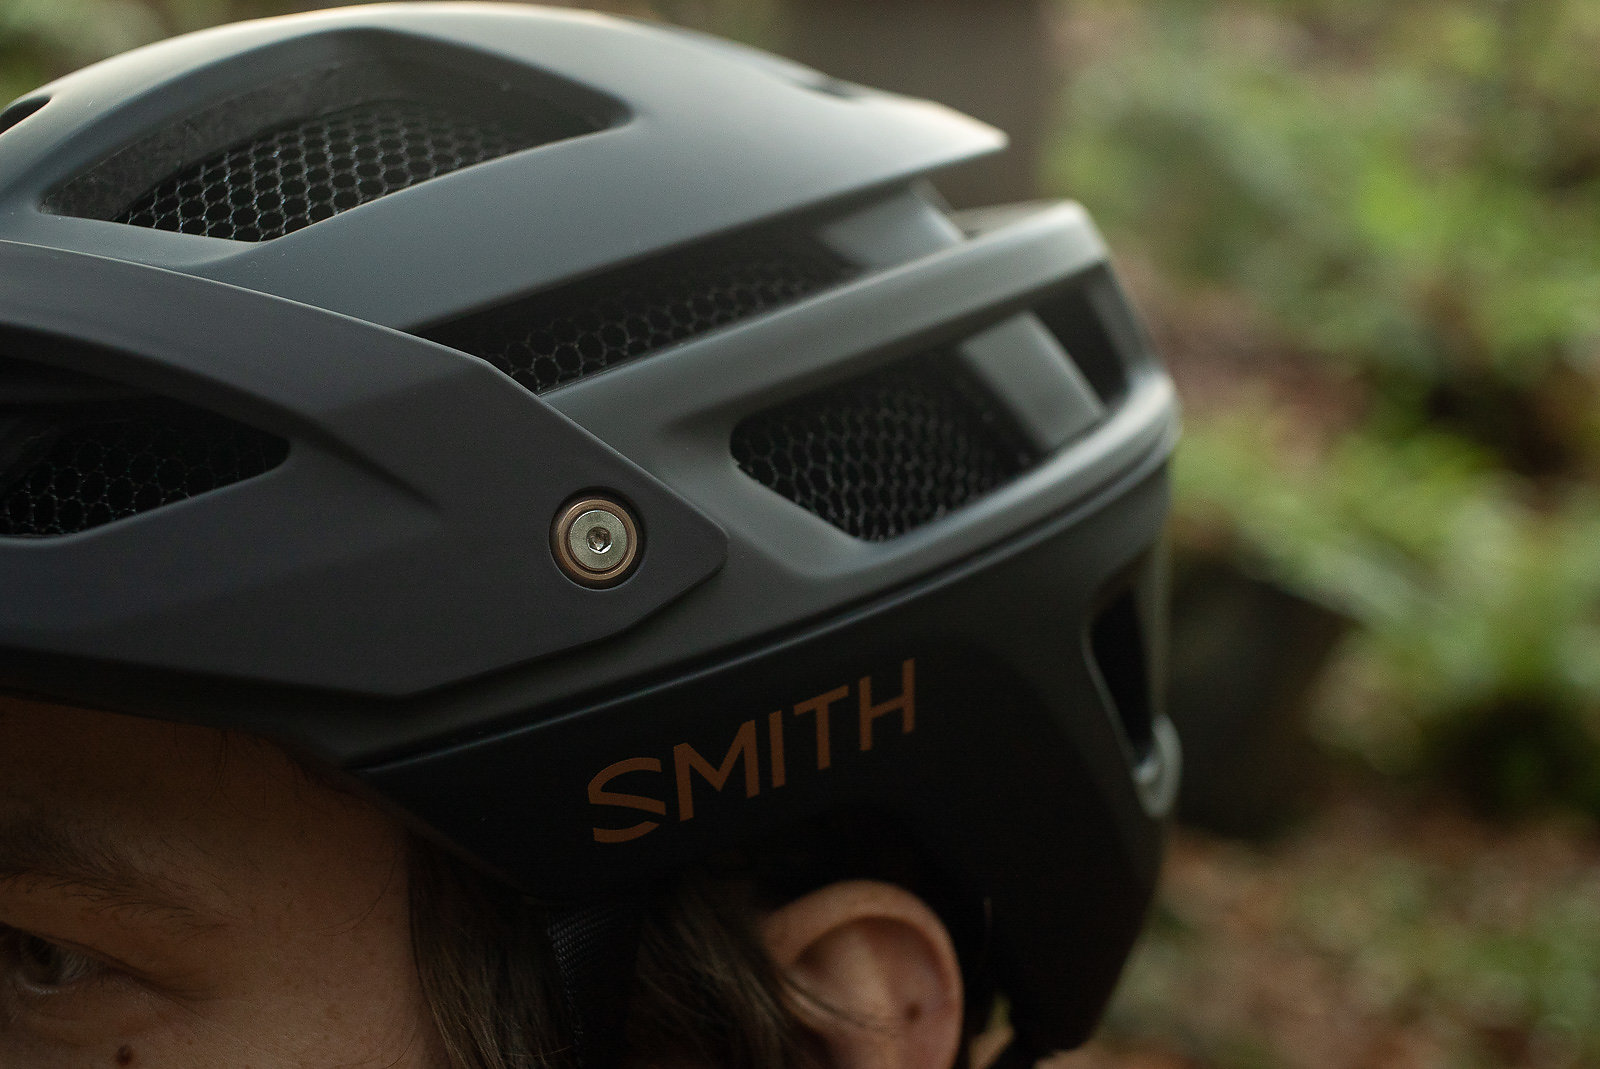 smith forefront 2 mtb helmet